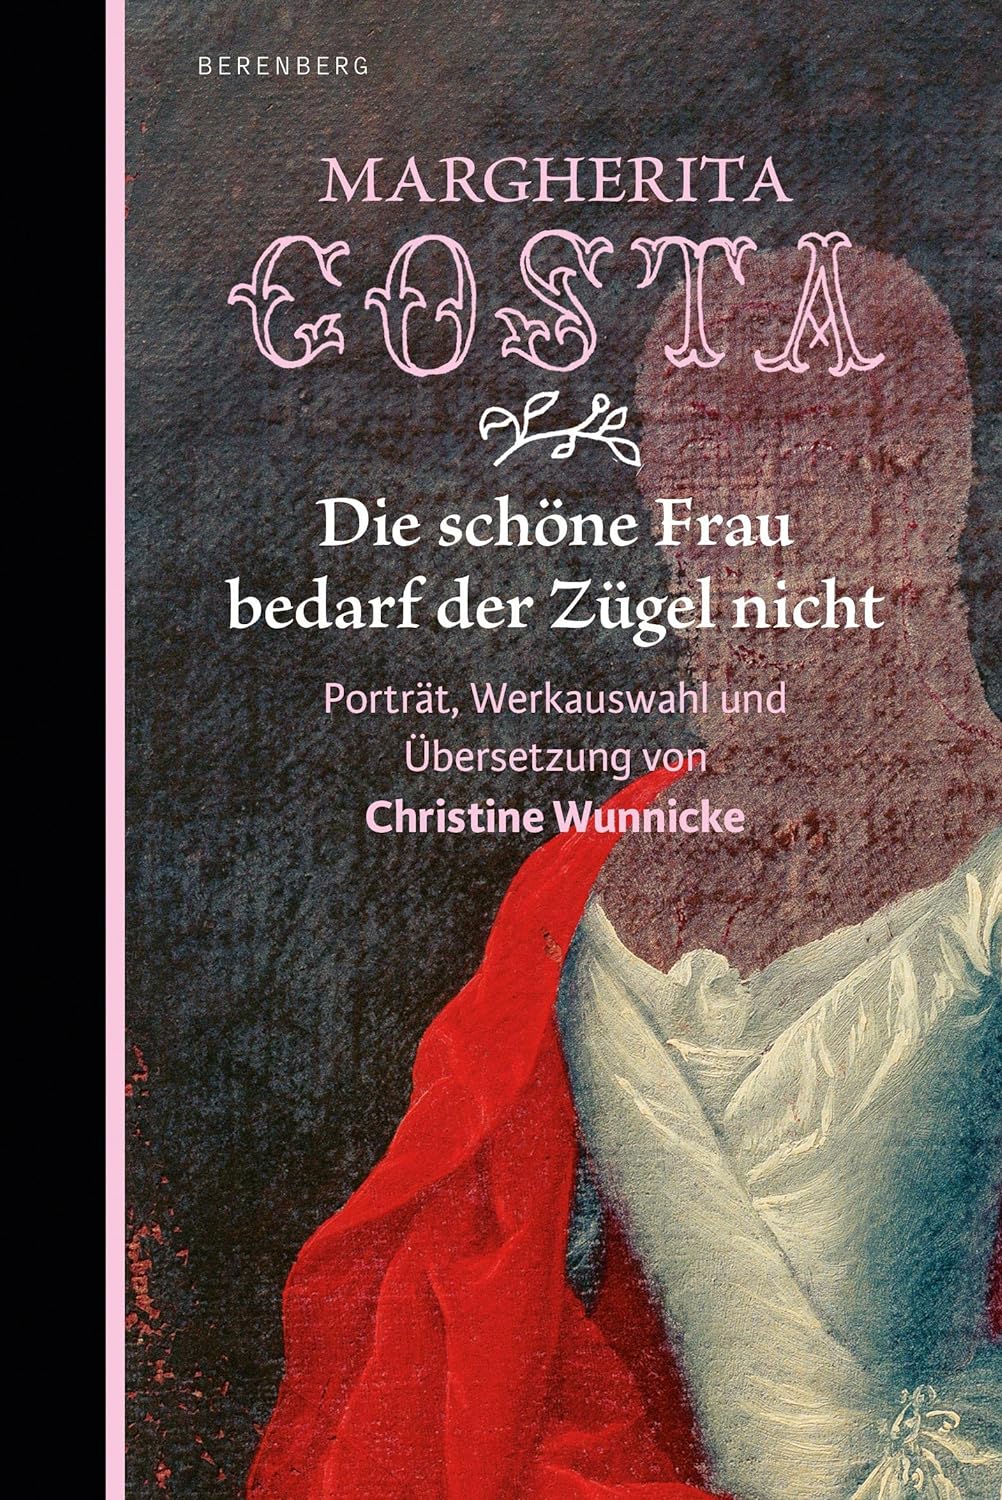 Buchcover - Christine Wunnicke - Margherita Costa